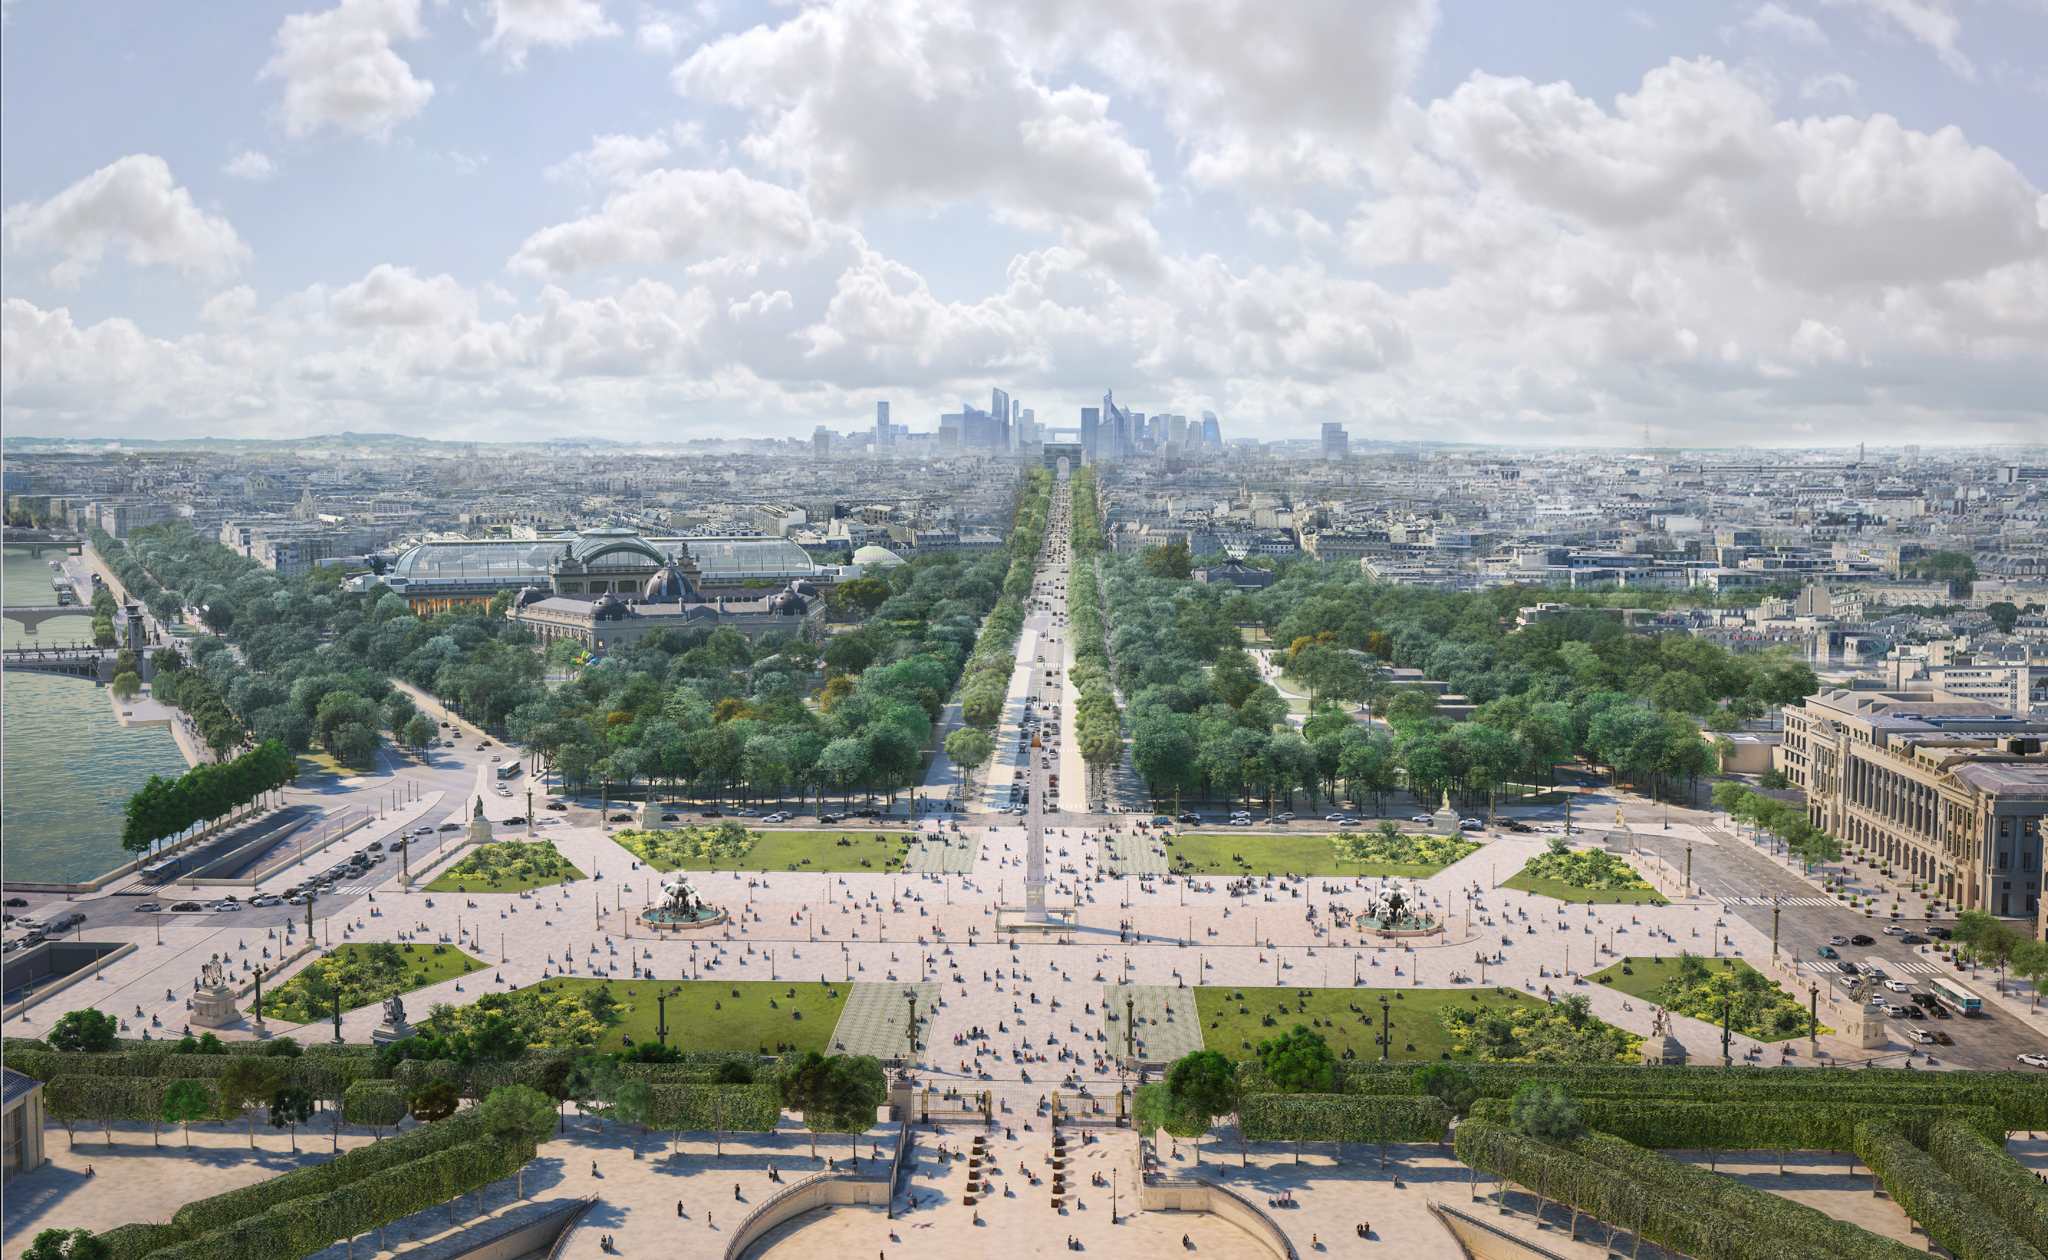 The “Champs-Élysées — history & perspectives” study